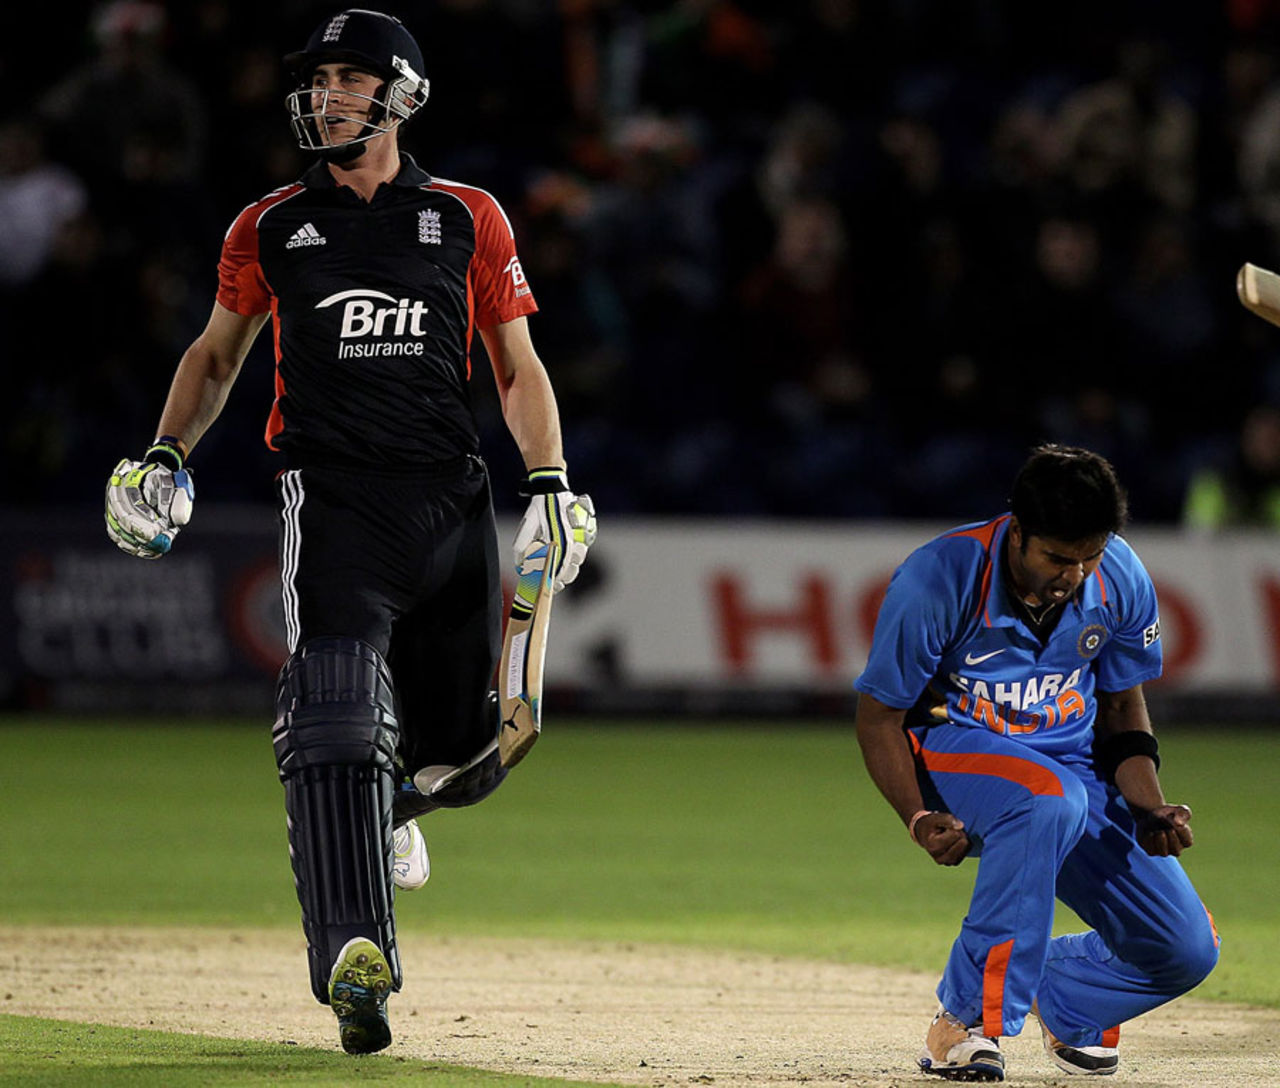 R Vinay Kumar celebrates dismissing Craig Kieswetter, England v India, 5th ODI, Cardiff, September 16, 2011